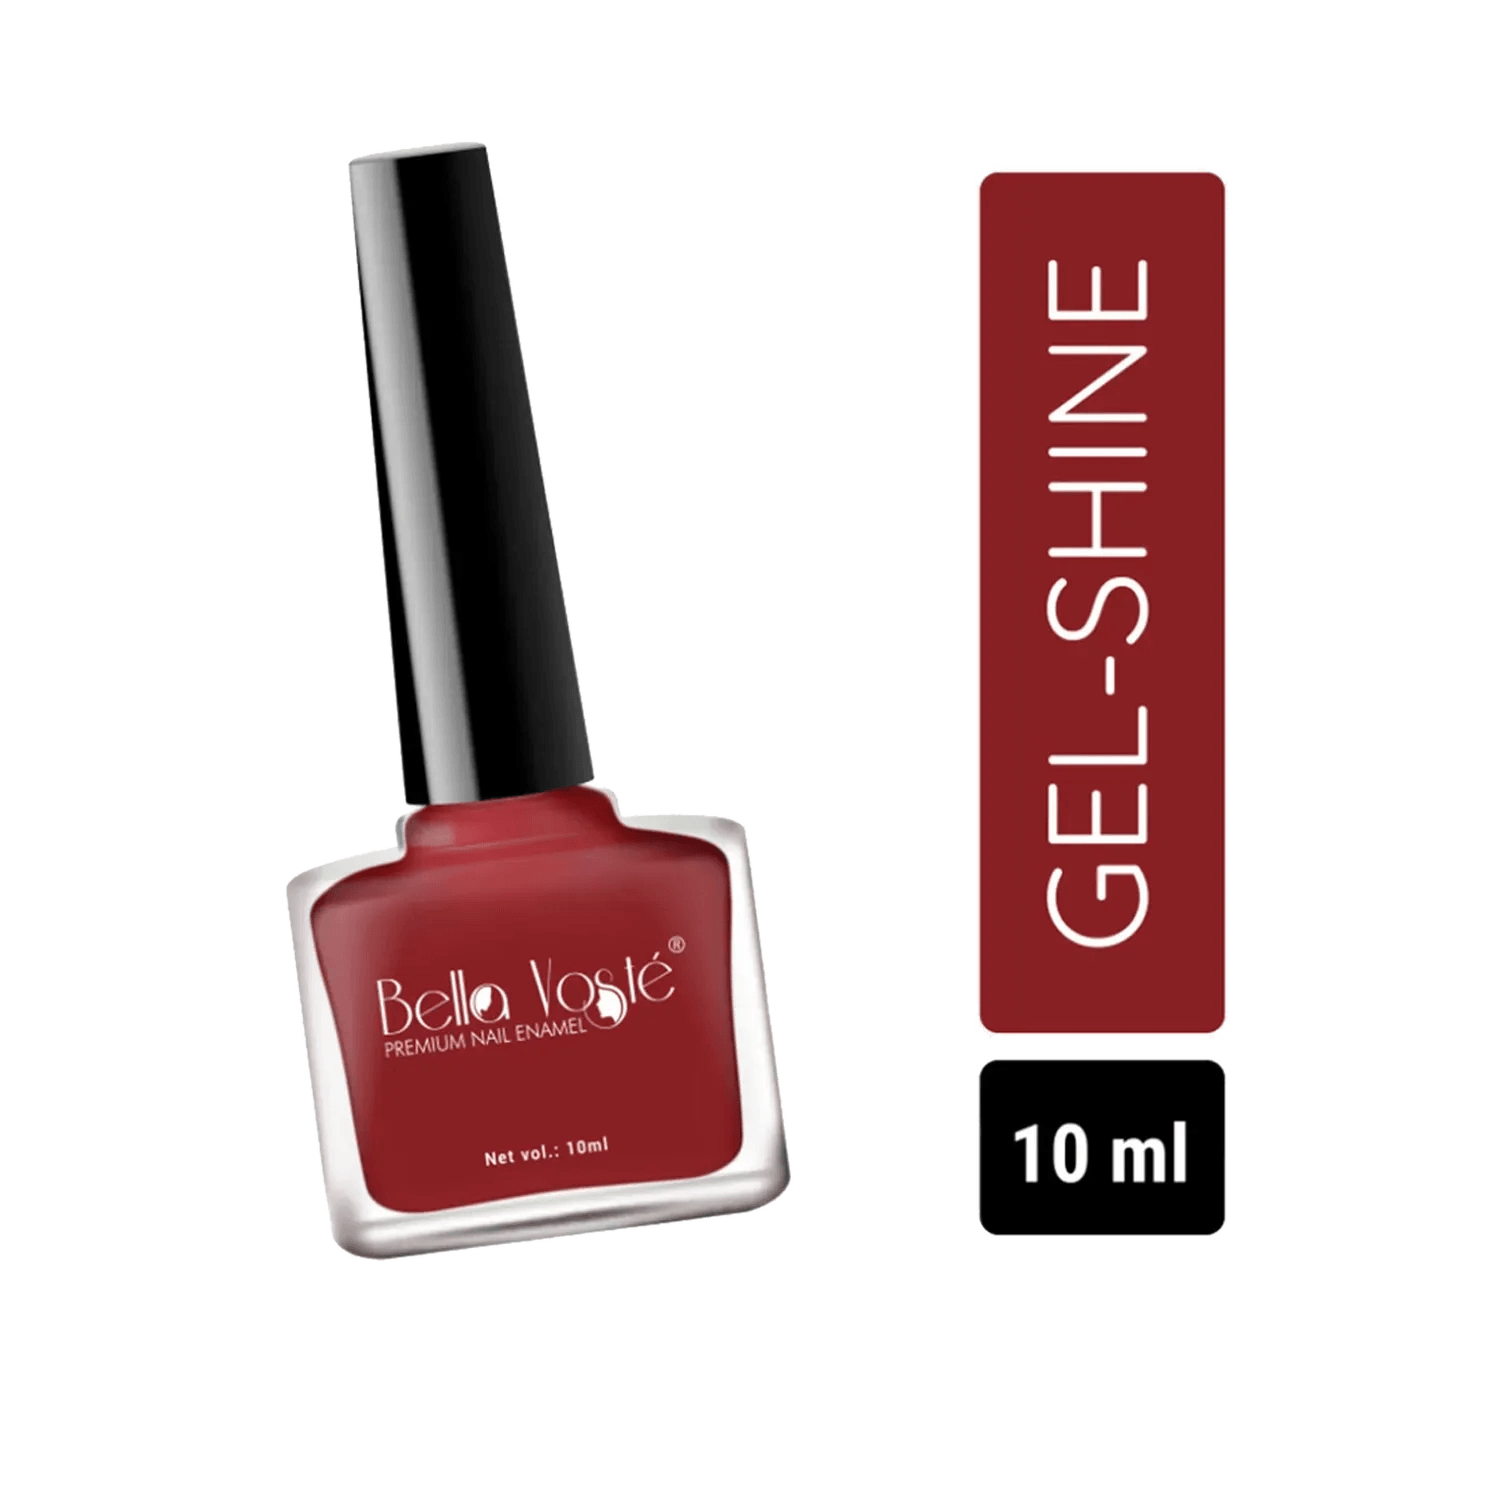 Bella Voste Gel-Shine Nail Paint - Shade 327 (10ml)